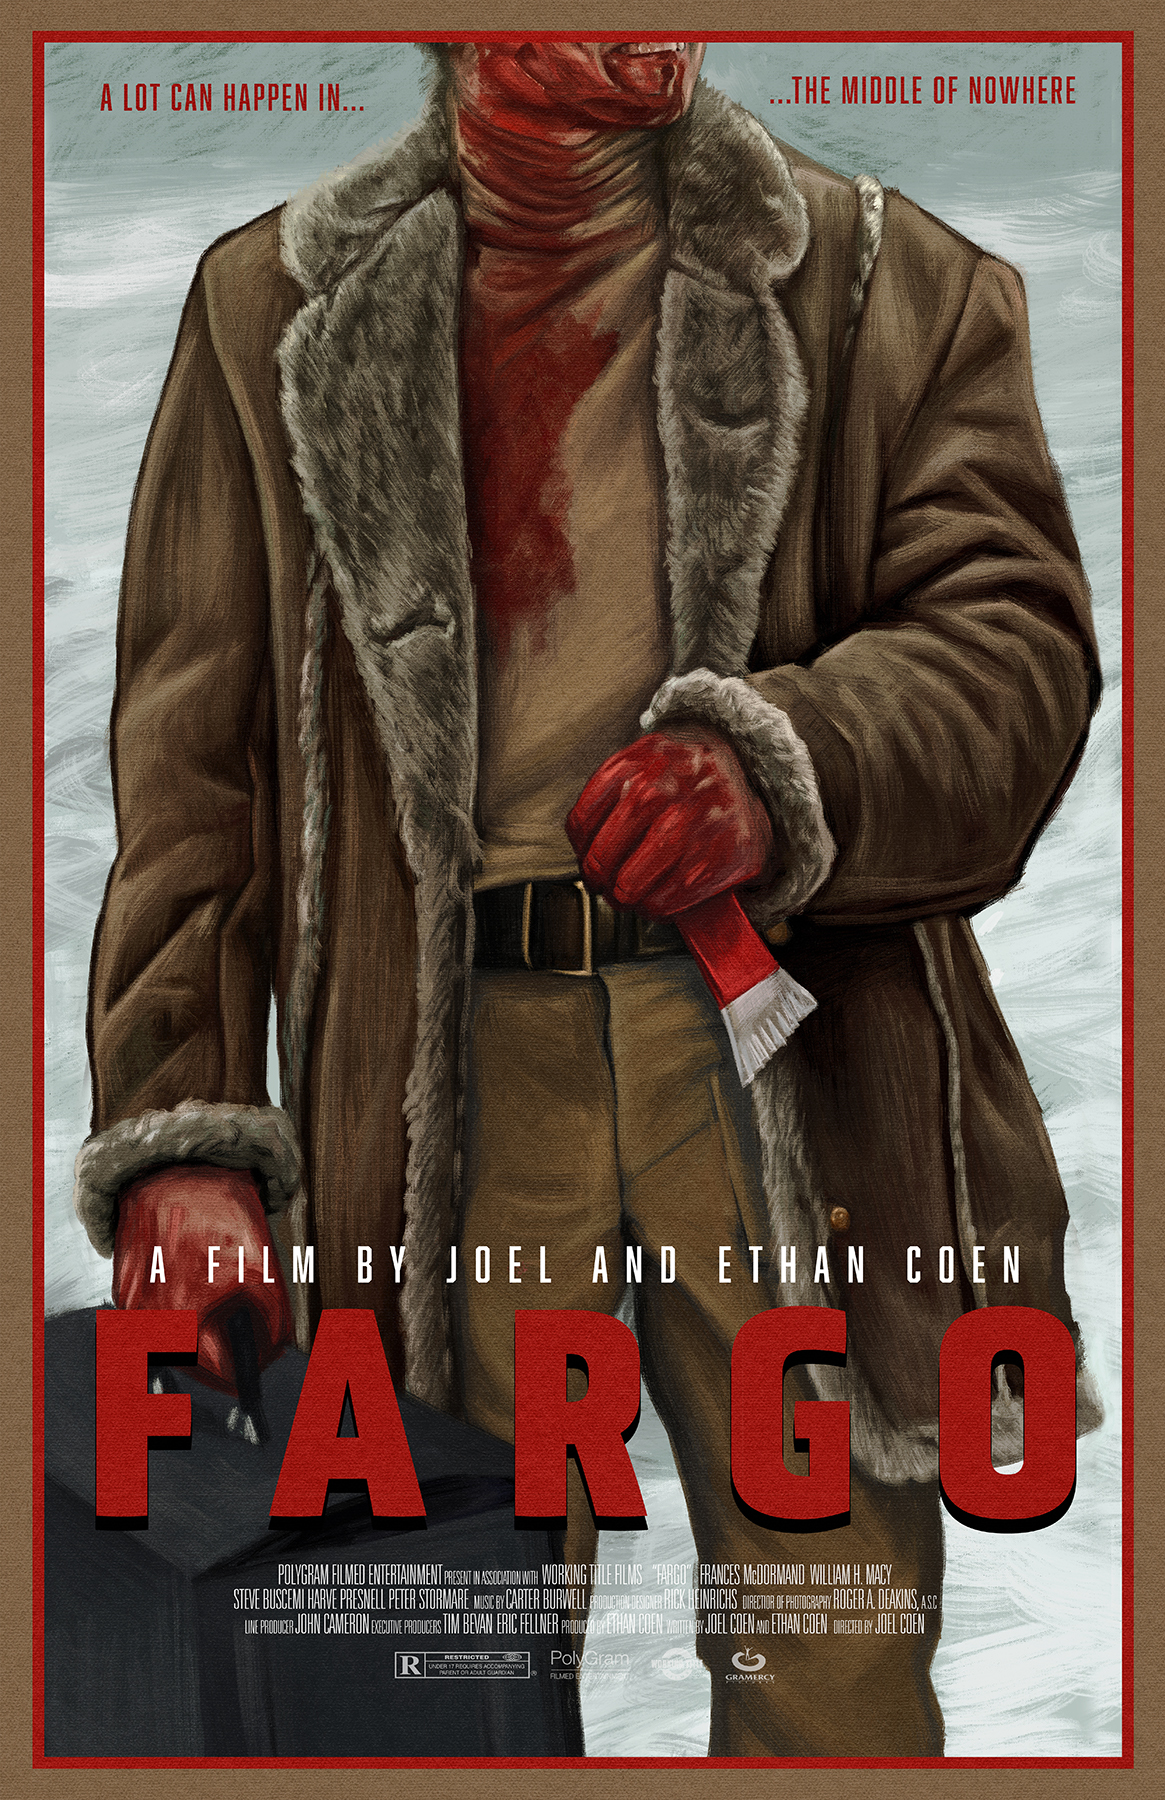 acceleration mandskab Tangle Fargo | Albertcolladoart | PosterSpy